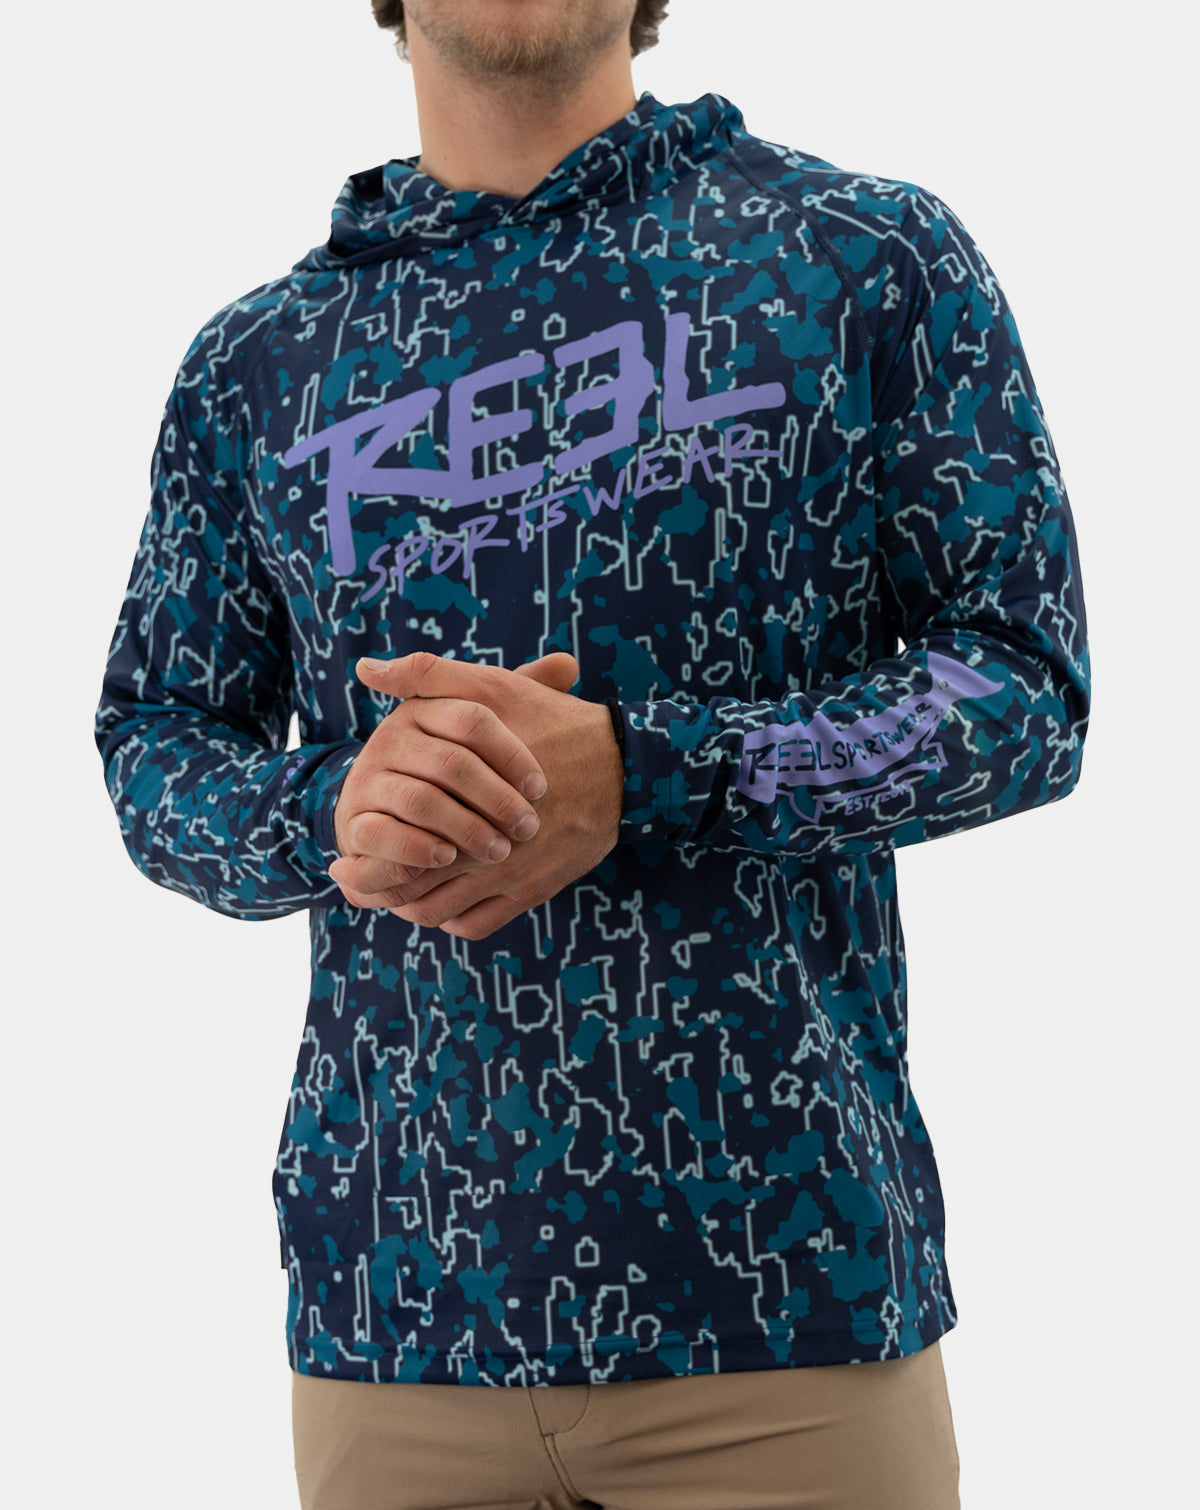 Maverick men's fishing Hoody long sleeve shirt, Reel Sportswear